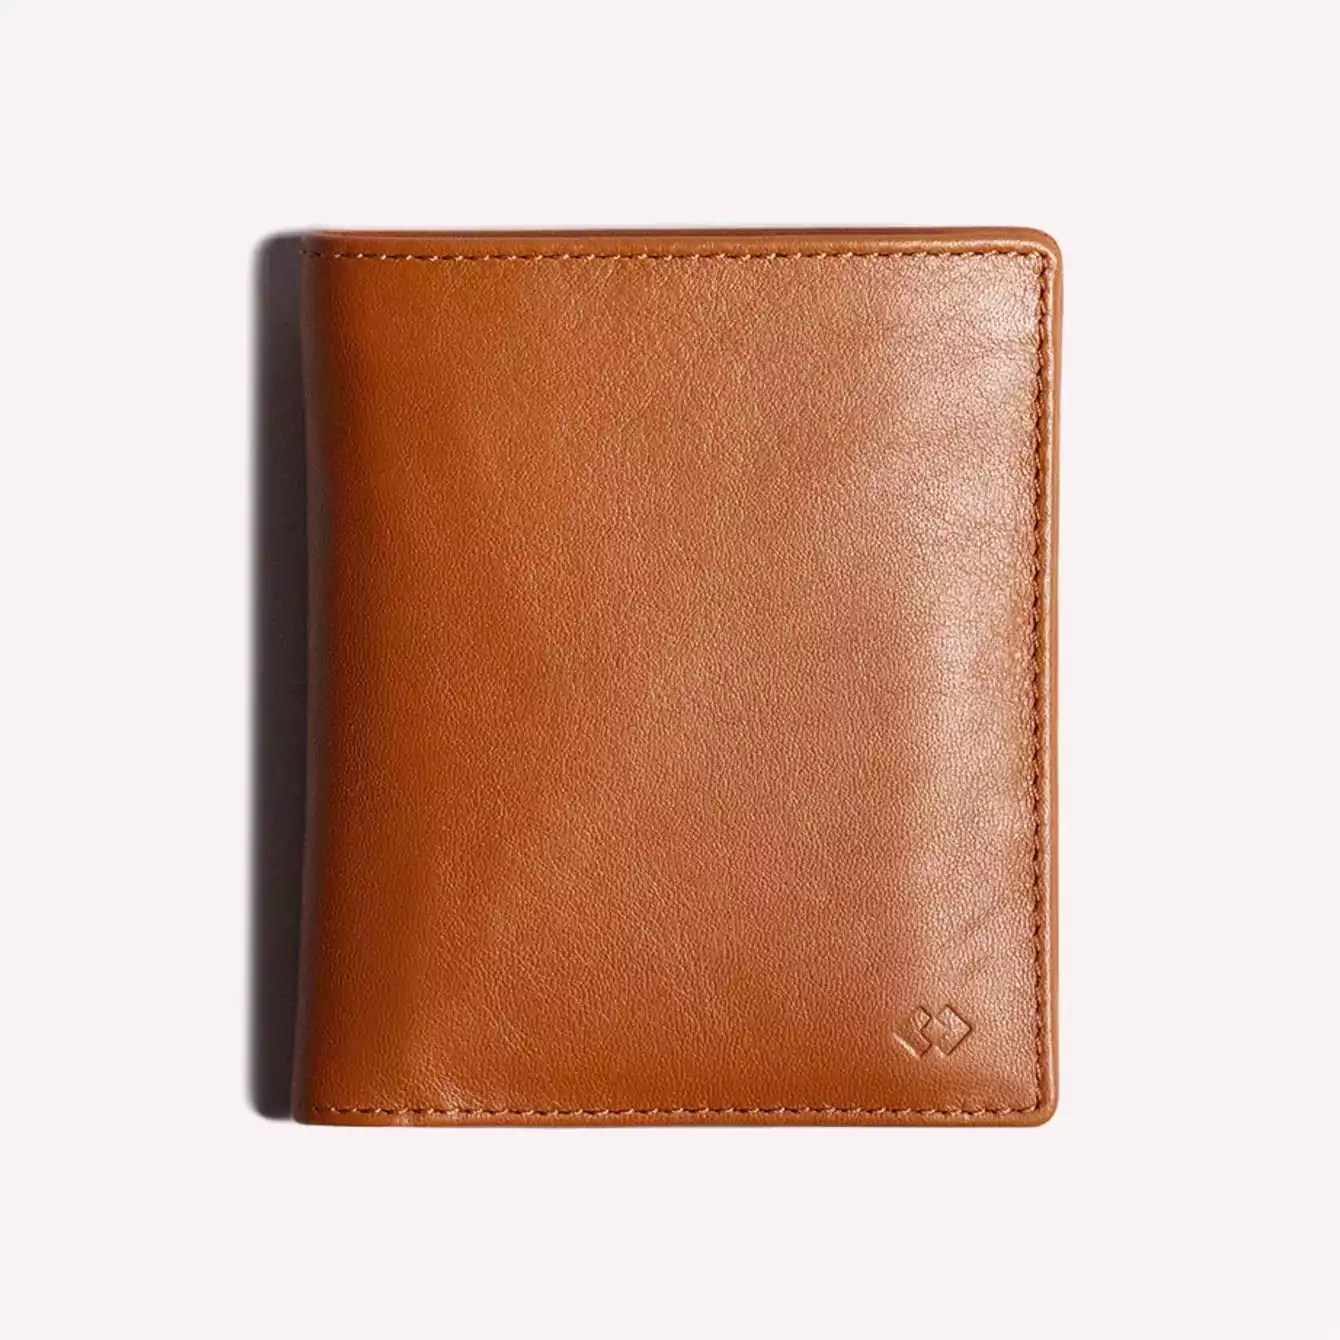 Harber London Leather Bifold Wallet